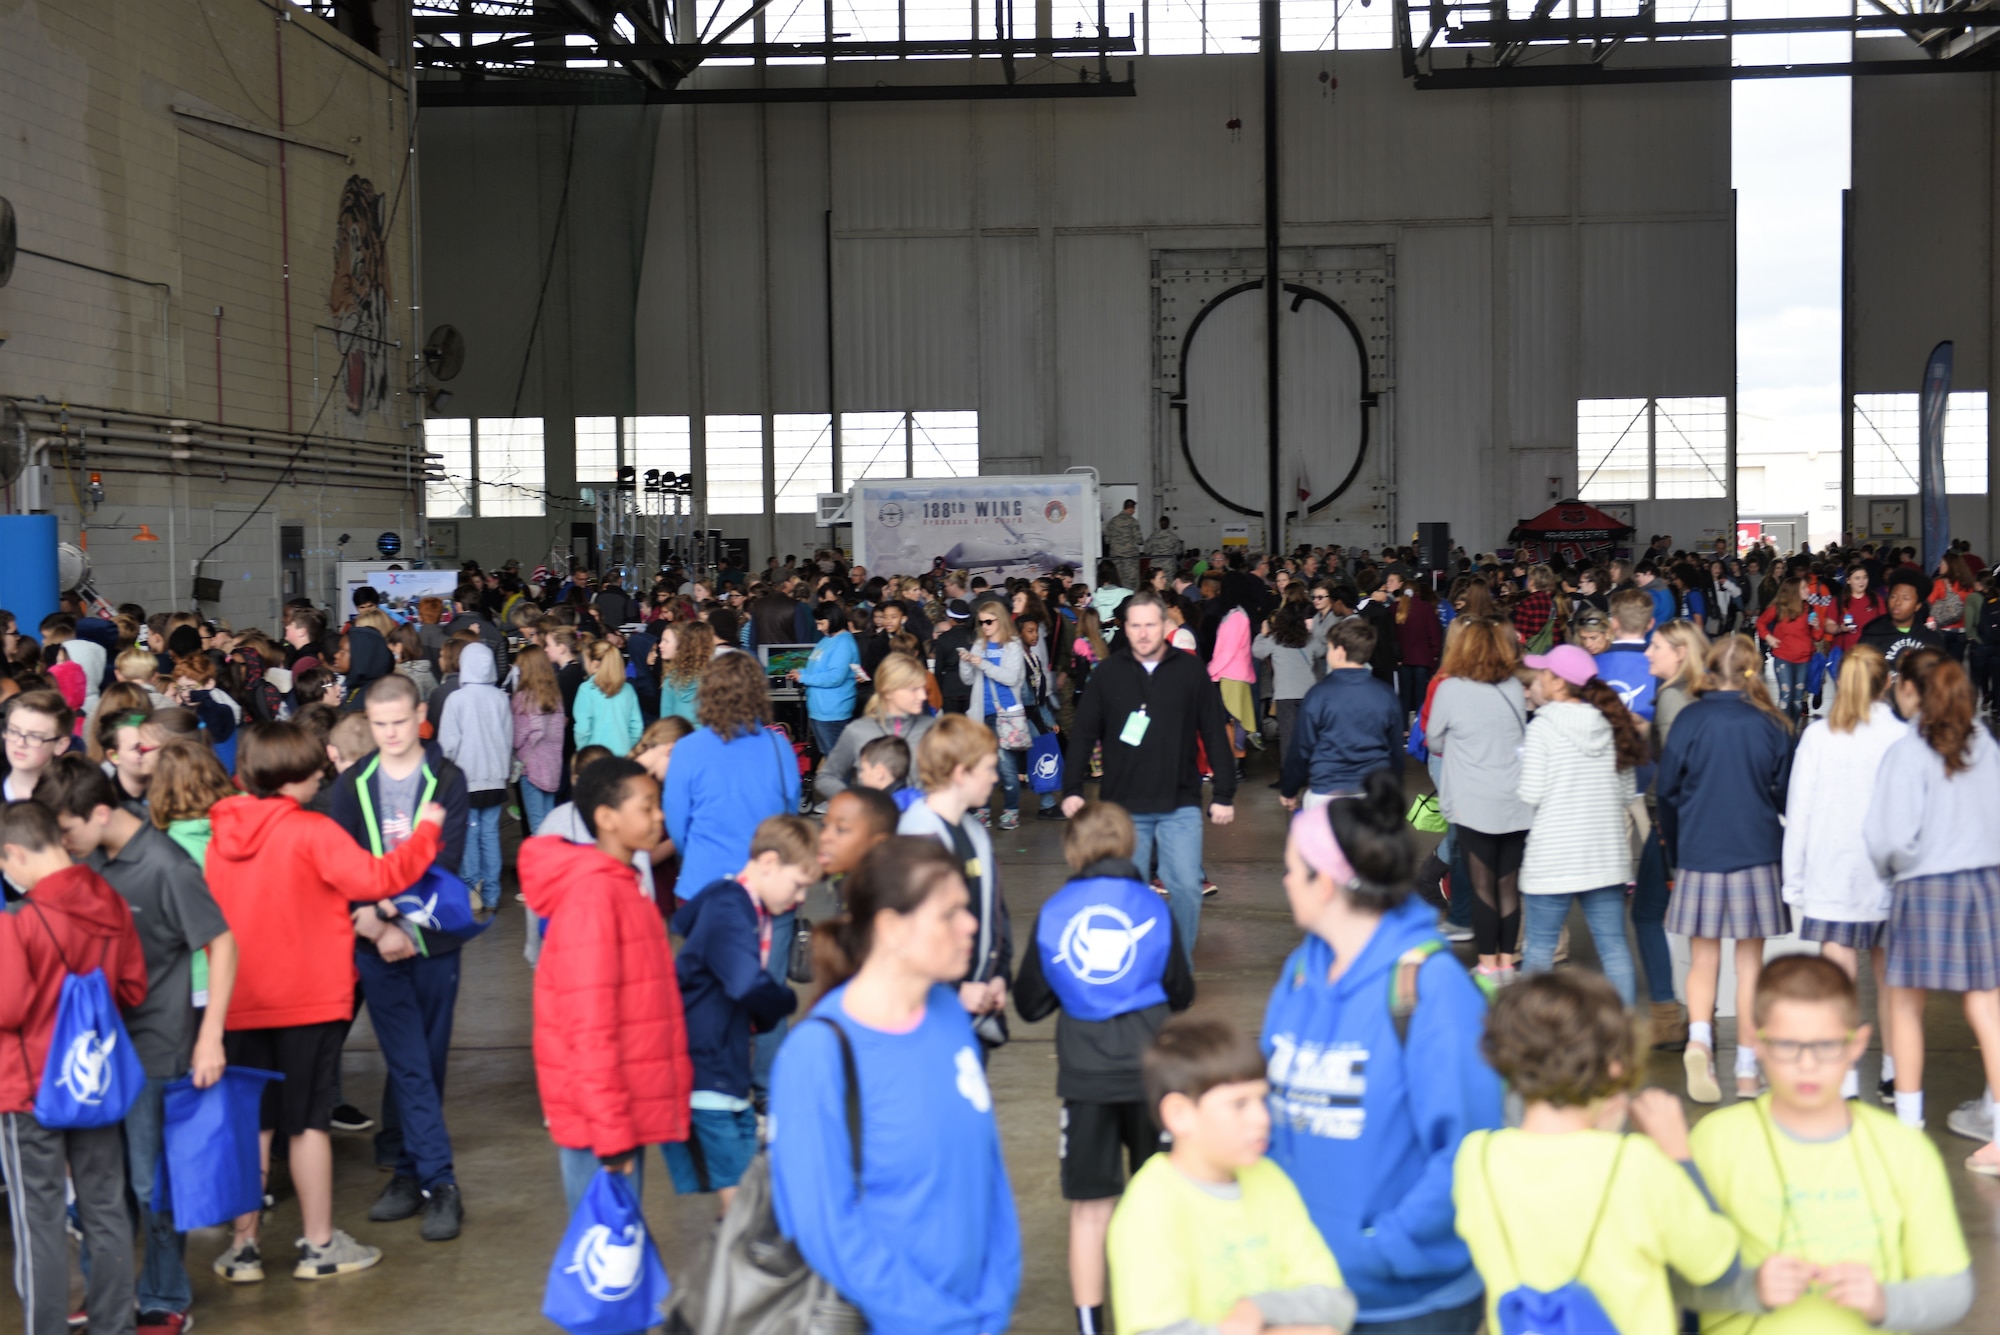 A crowd of school age children gather in an aircraft hangar